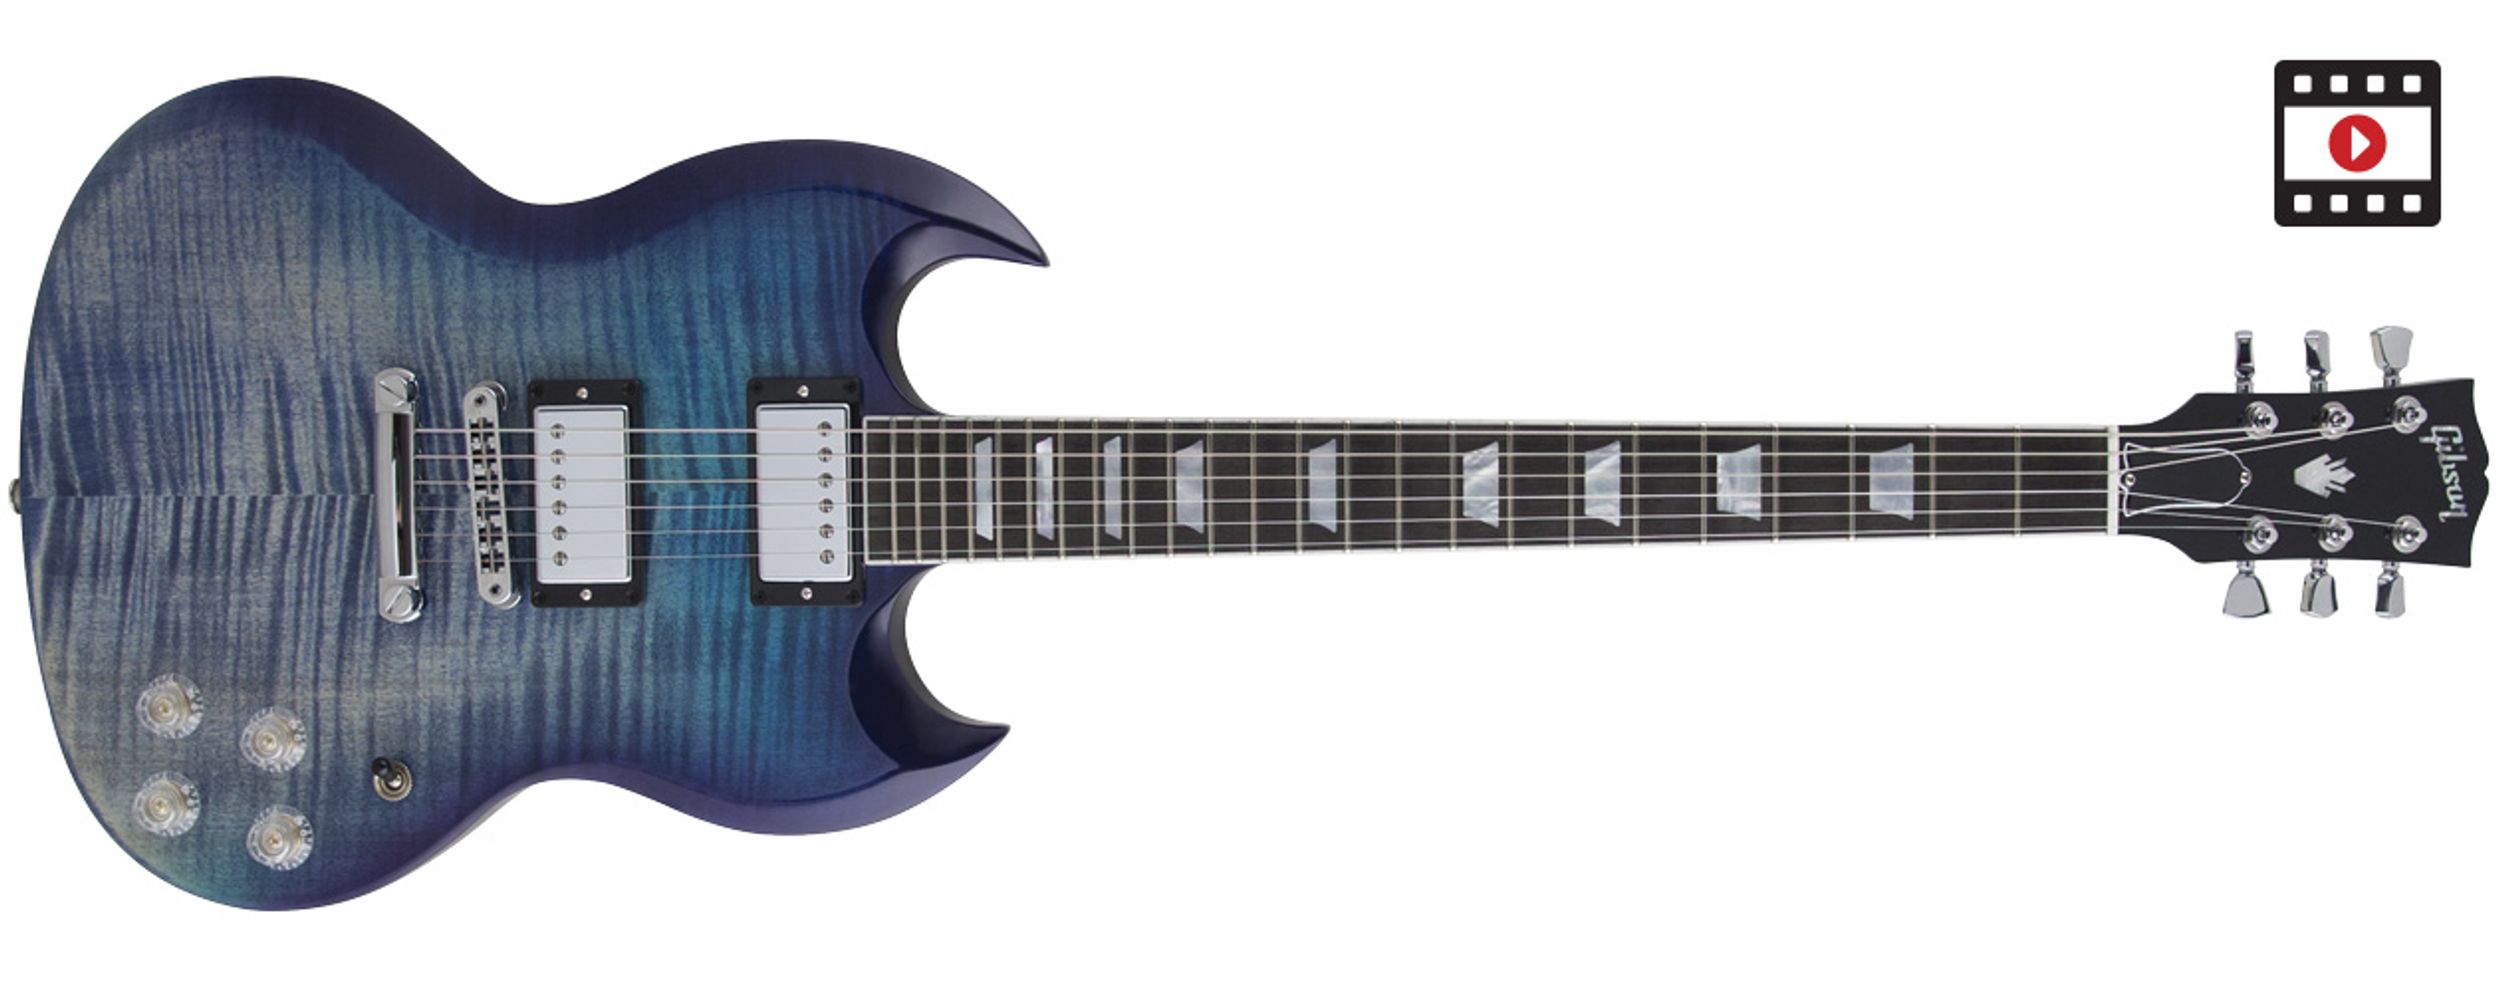 Gibson SG Modern Review